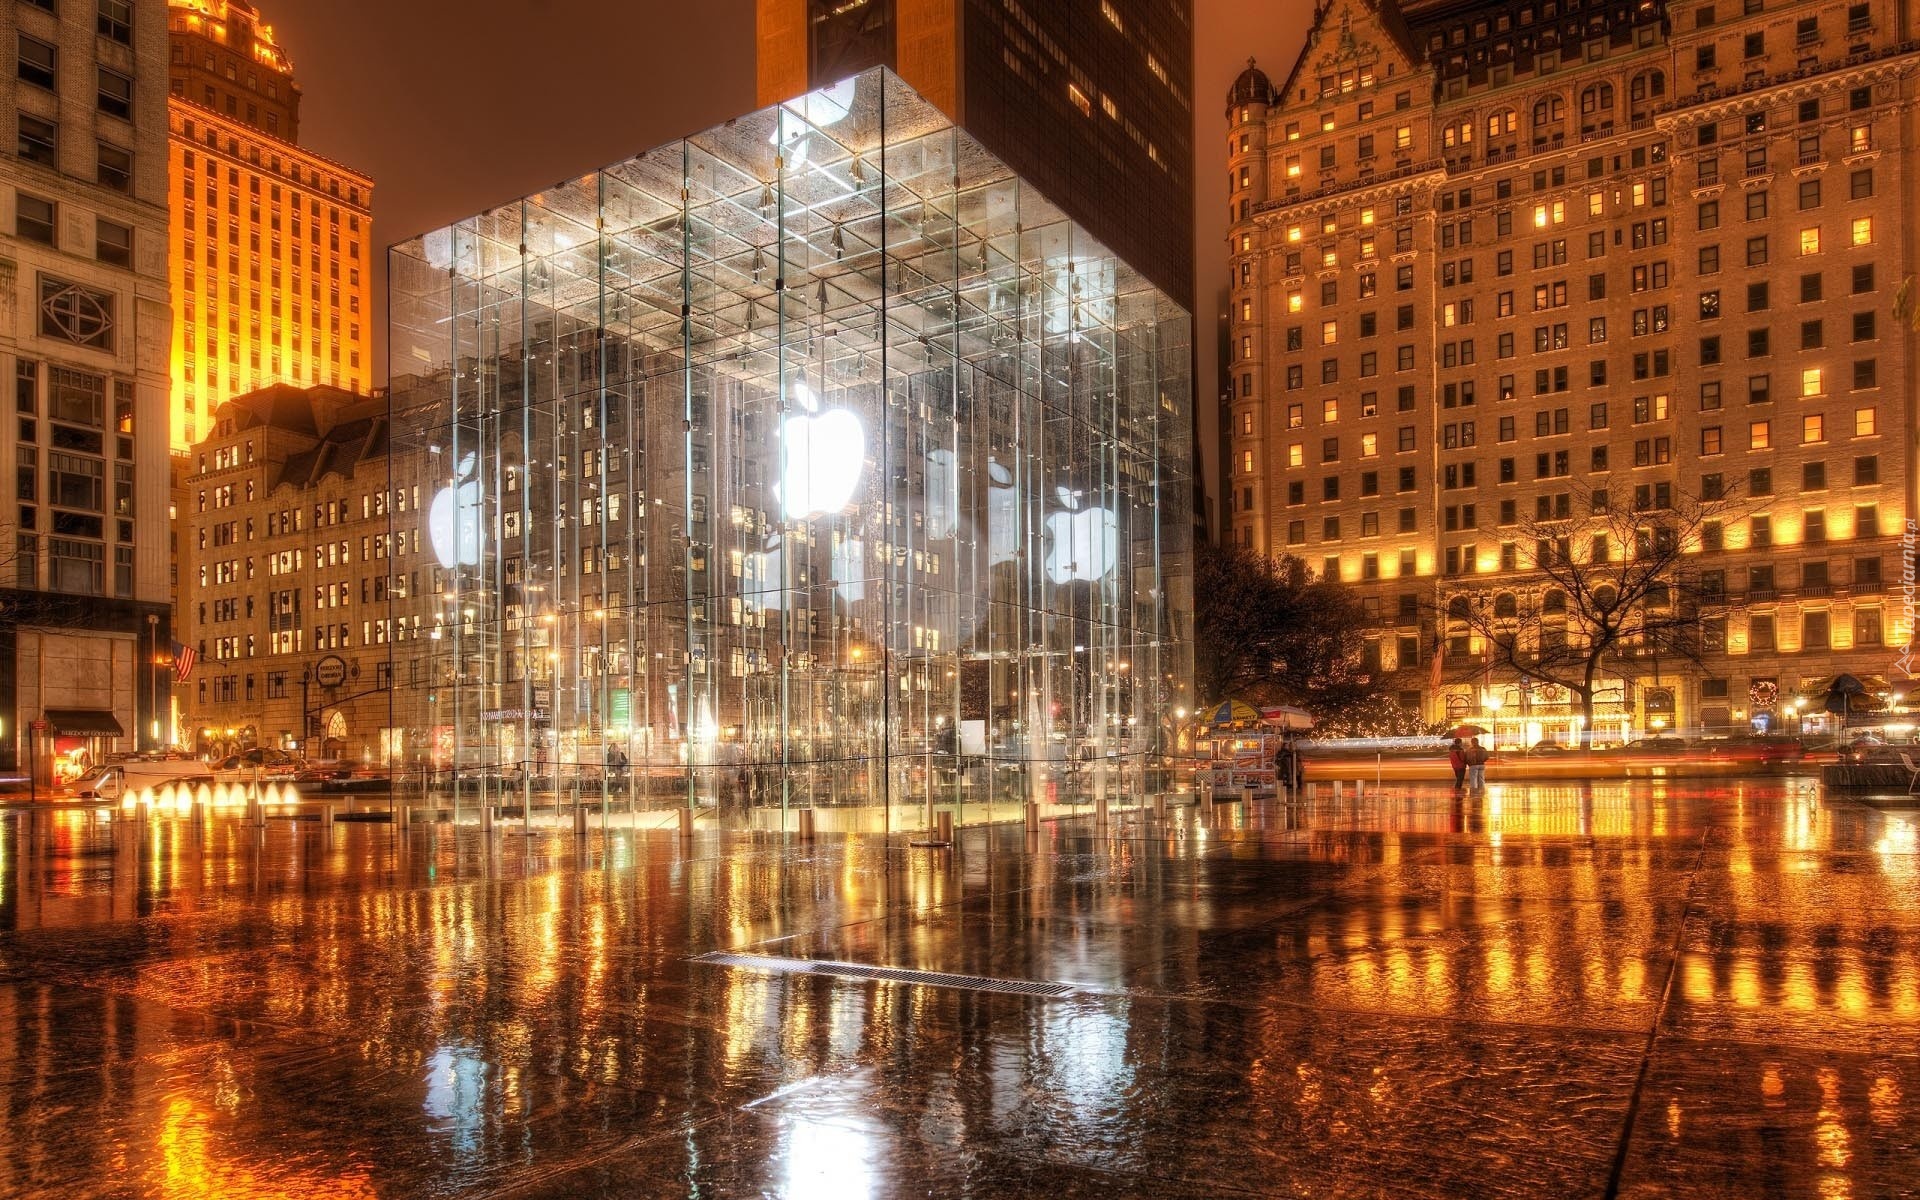 Apple Store, Drapacze Chmur, Nowy Jork